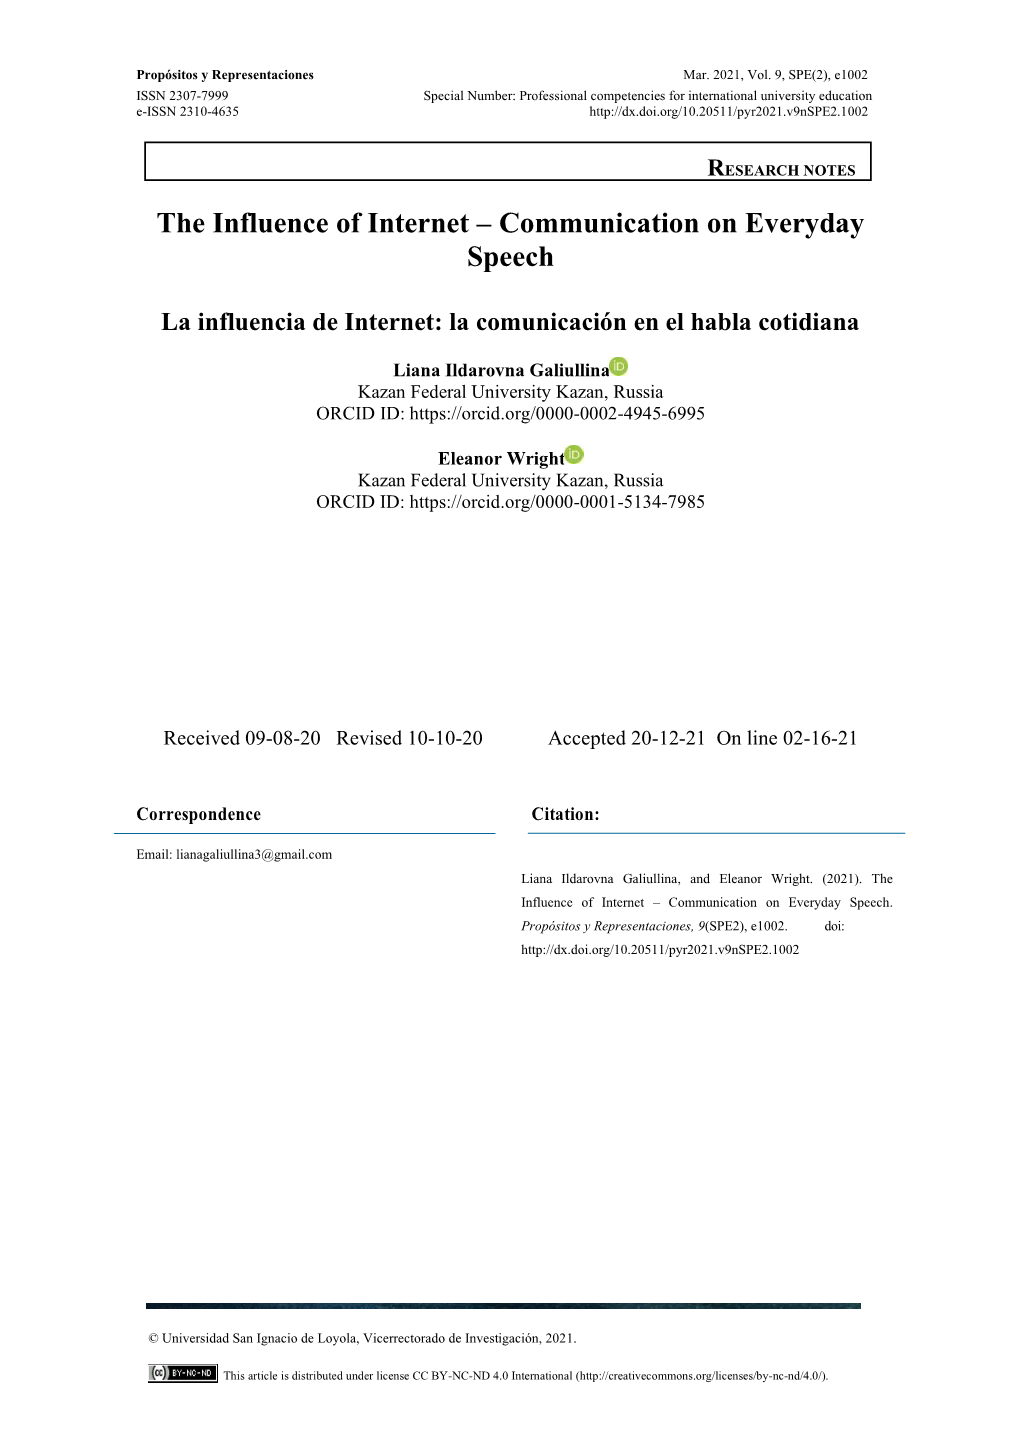 The Influence of Internet – Communication on Everyday Speech